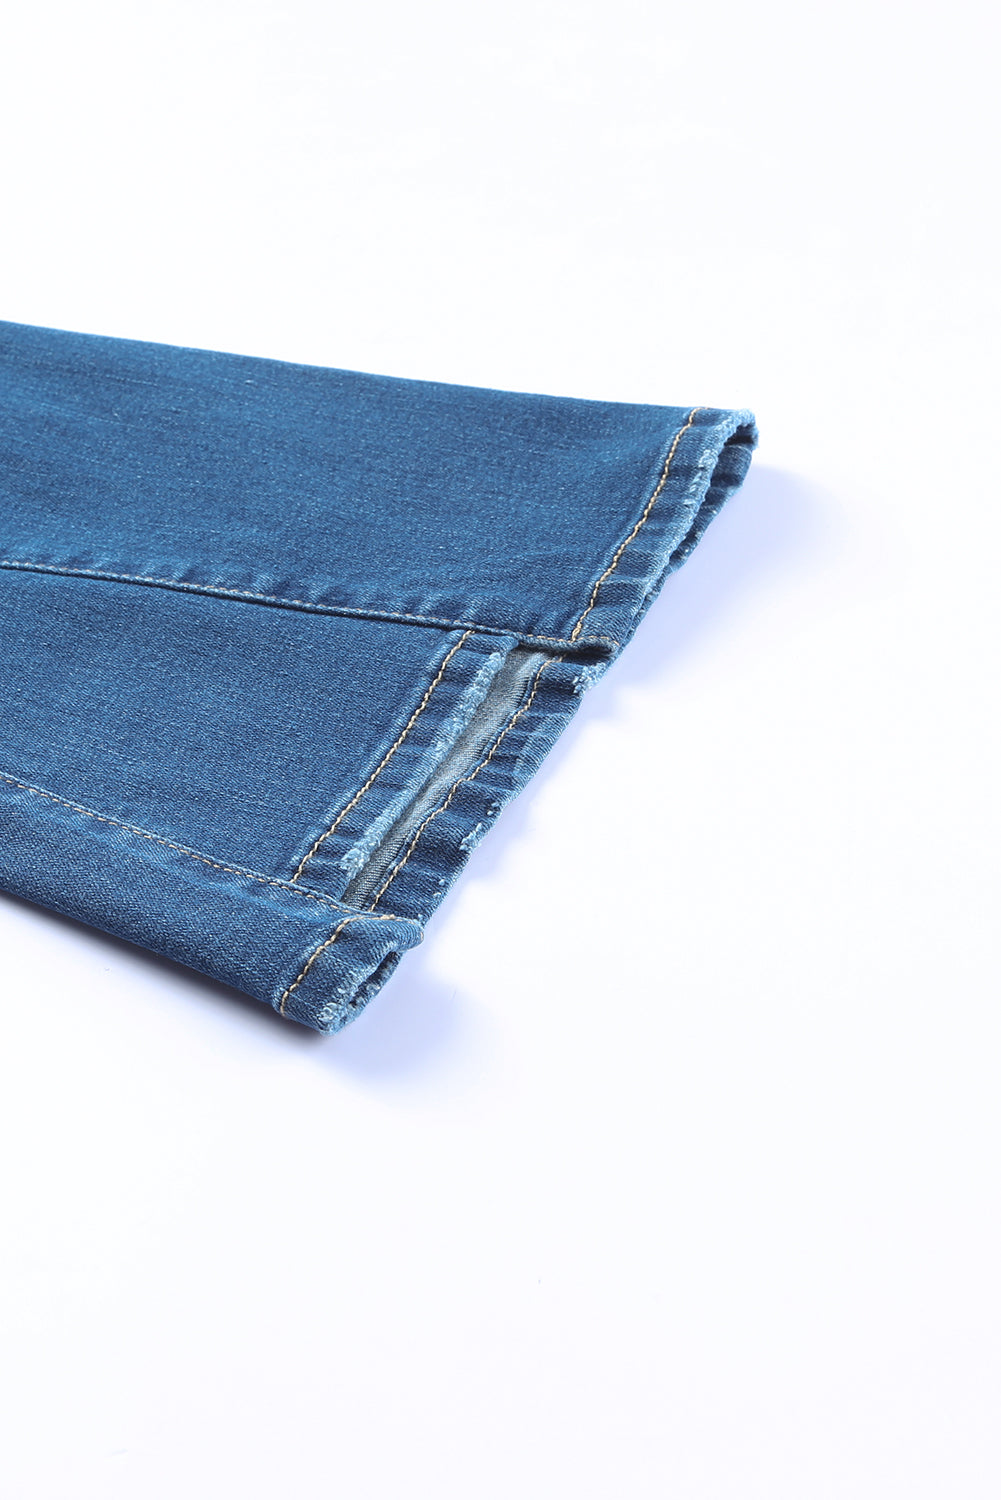 Sky Blue Medium Wash High Rise Flare Jeans Jeans JT's Designer Fashion